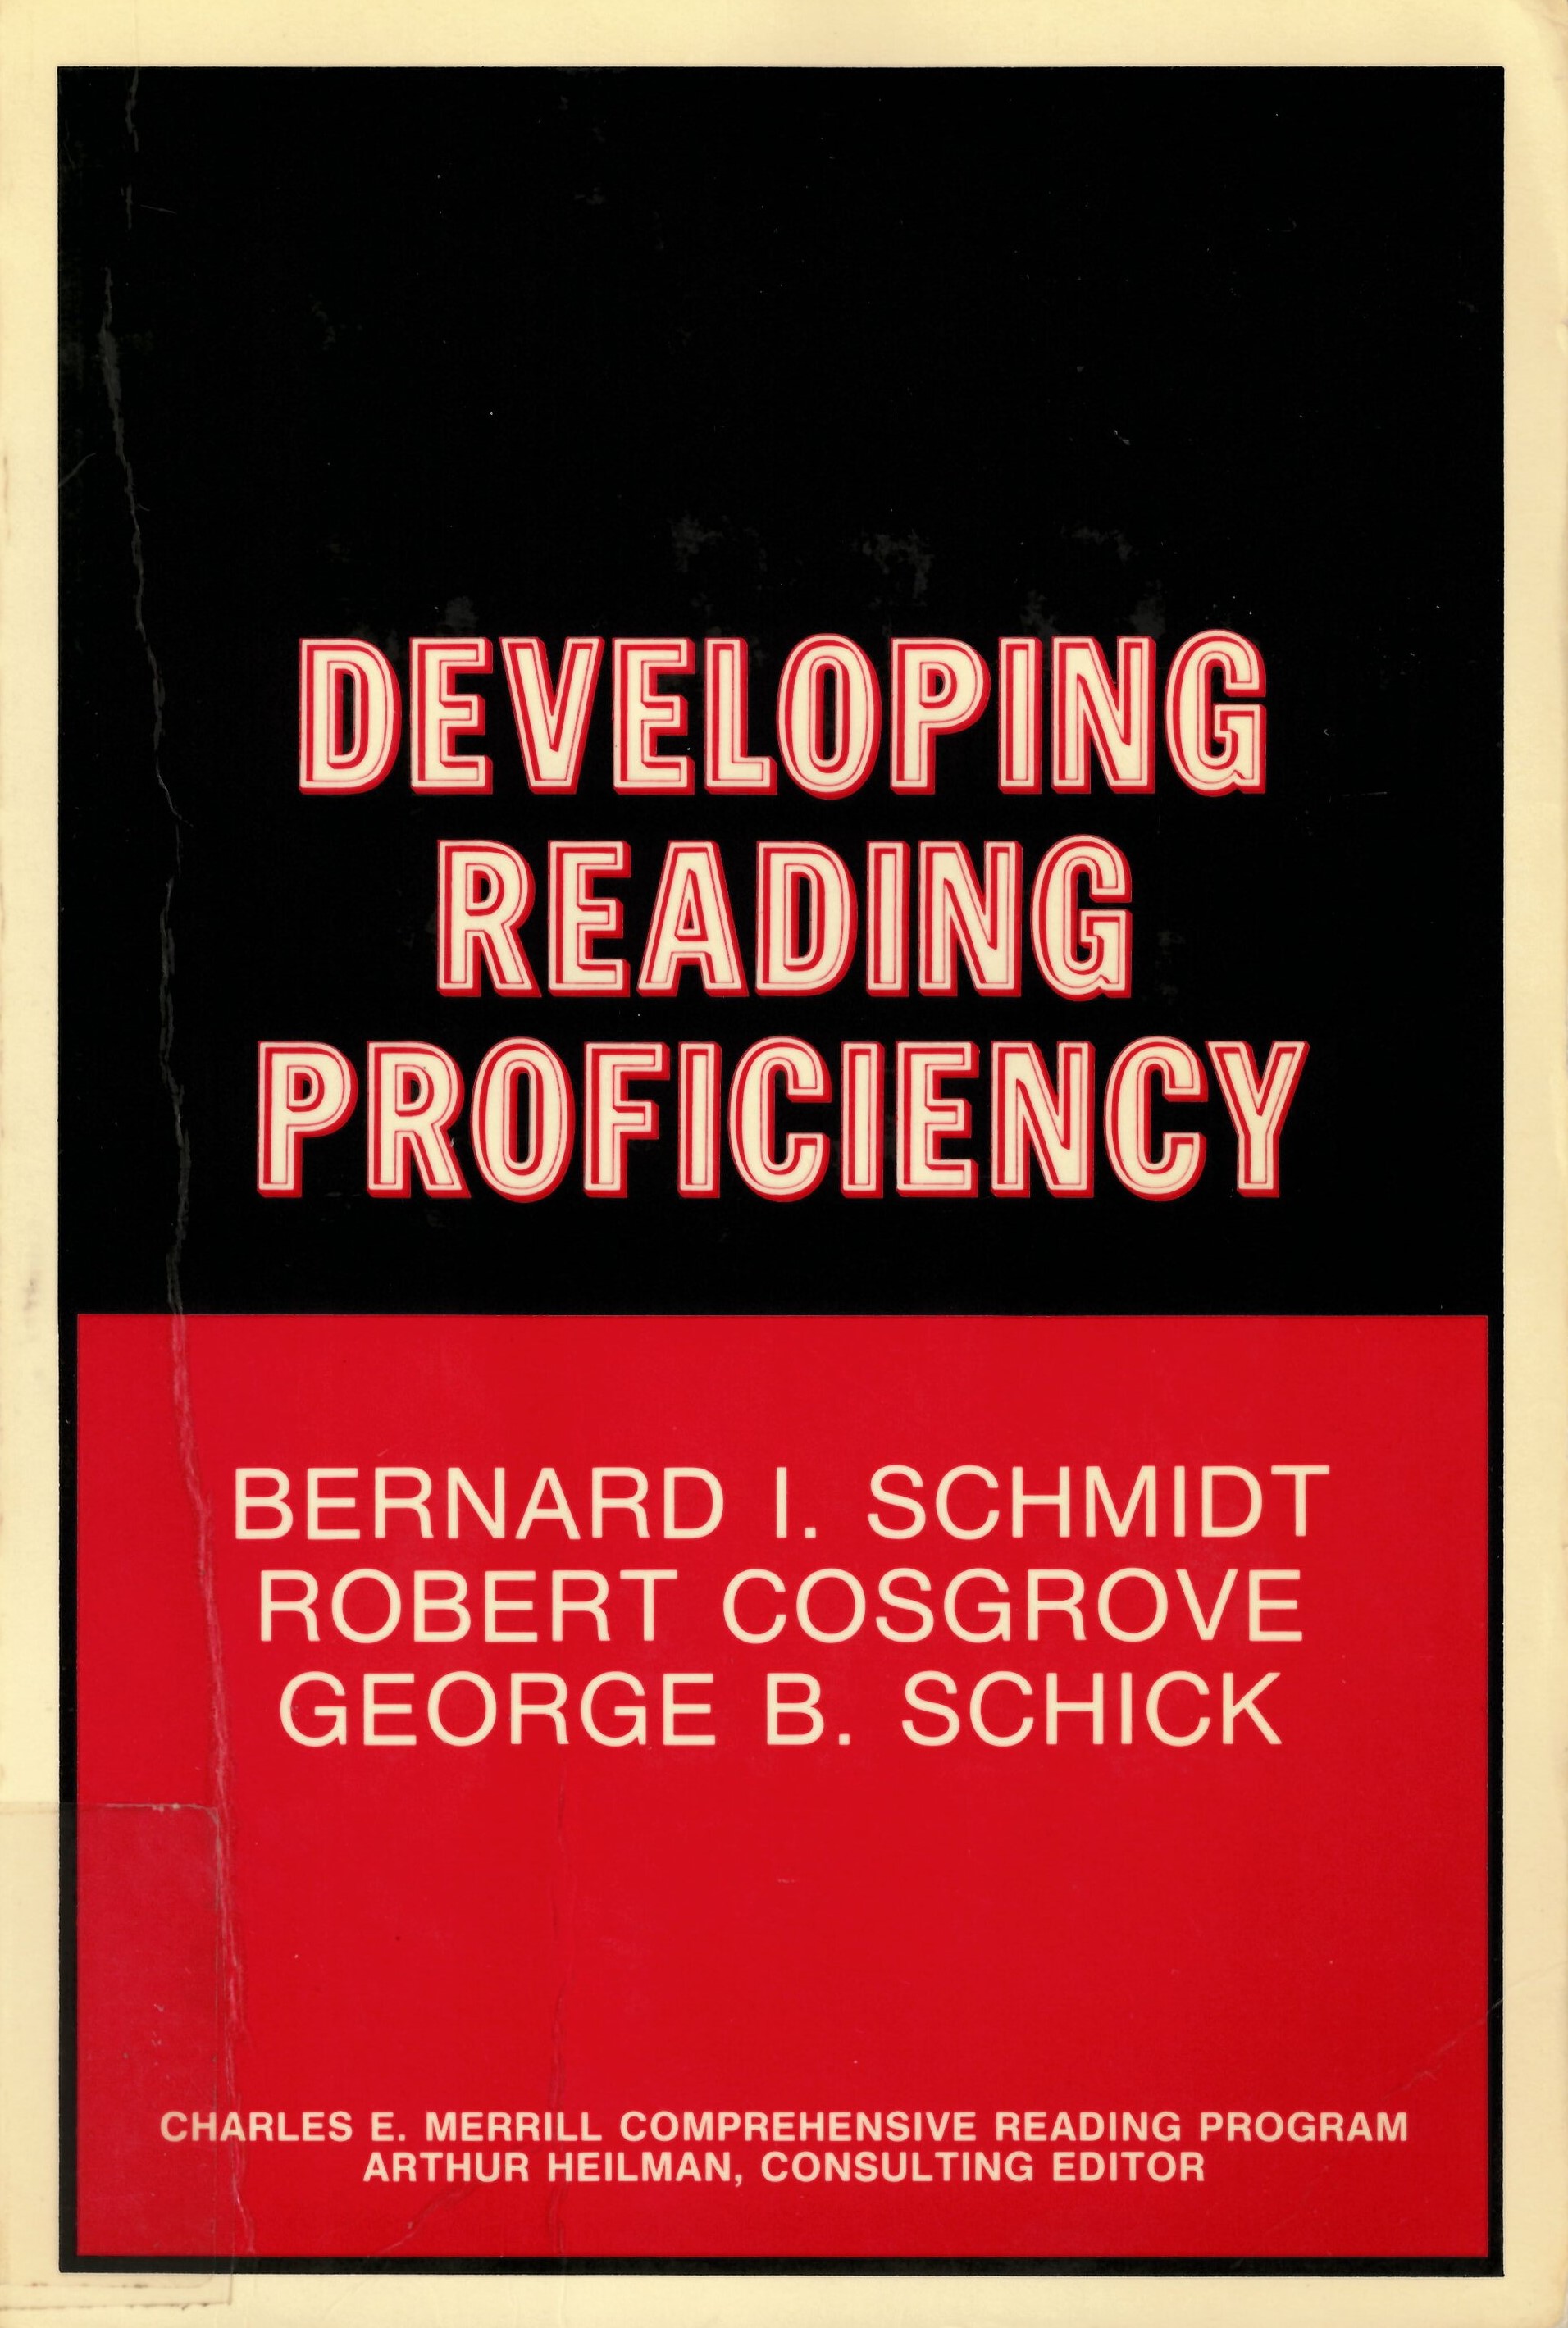 Developing reading proficiency